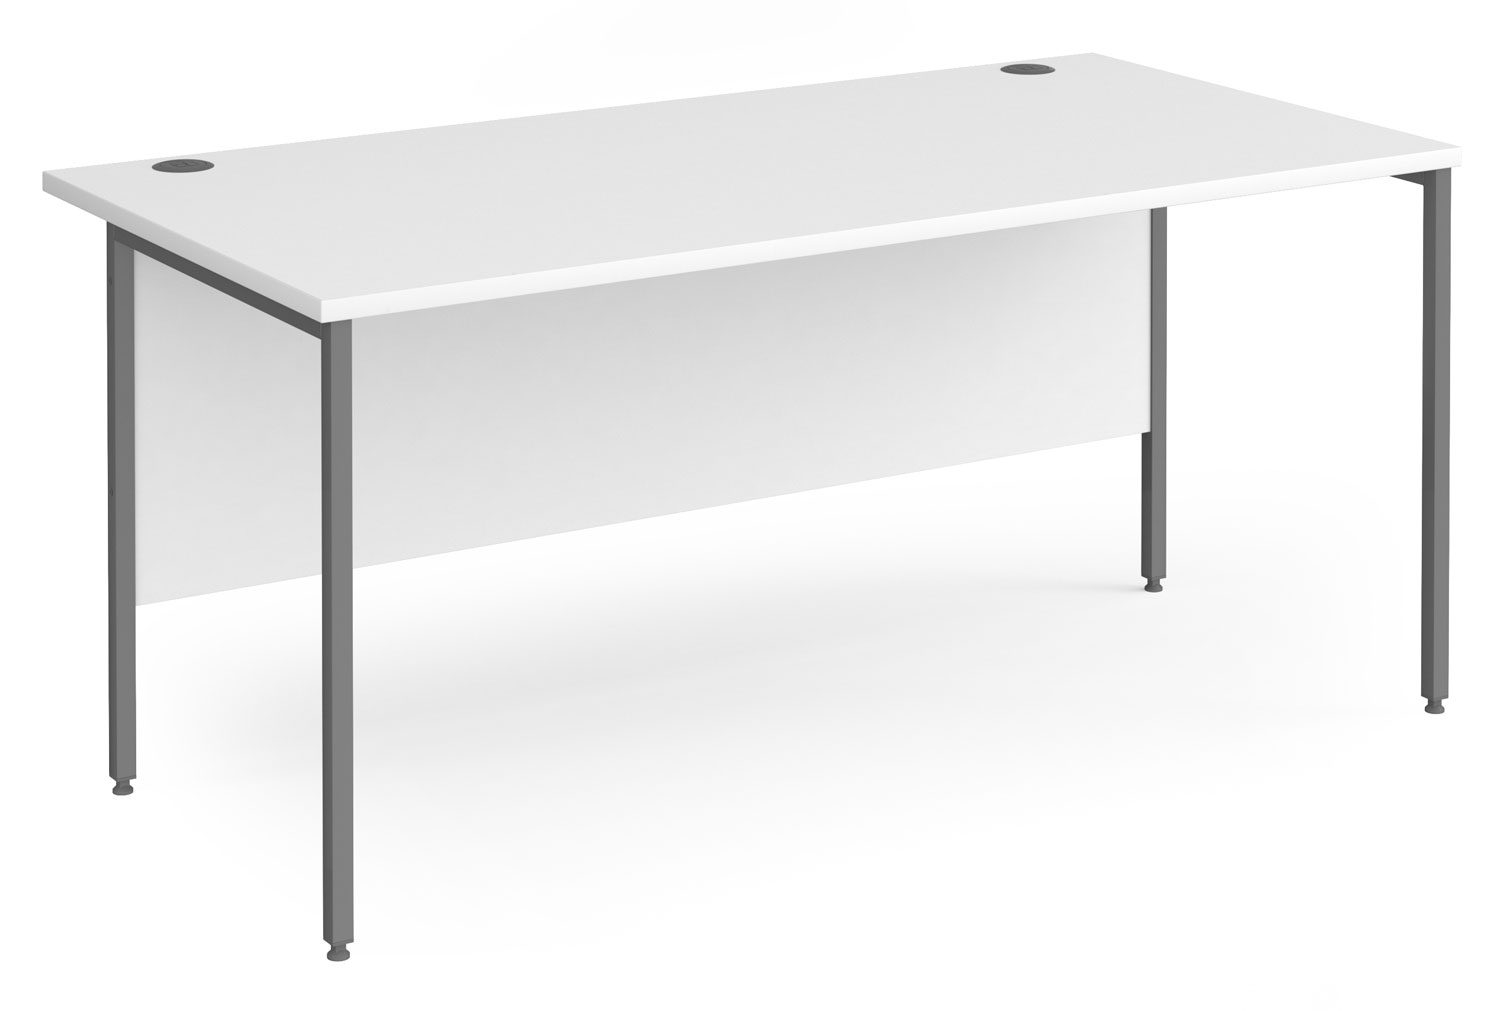 Value Line Classic+ Rectangular H-Leg Office Desk (Graphite Leg), 160wx80dx73h (cm), White, Express Delivery